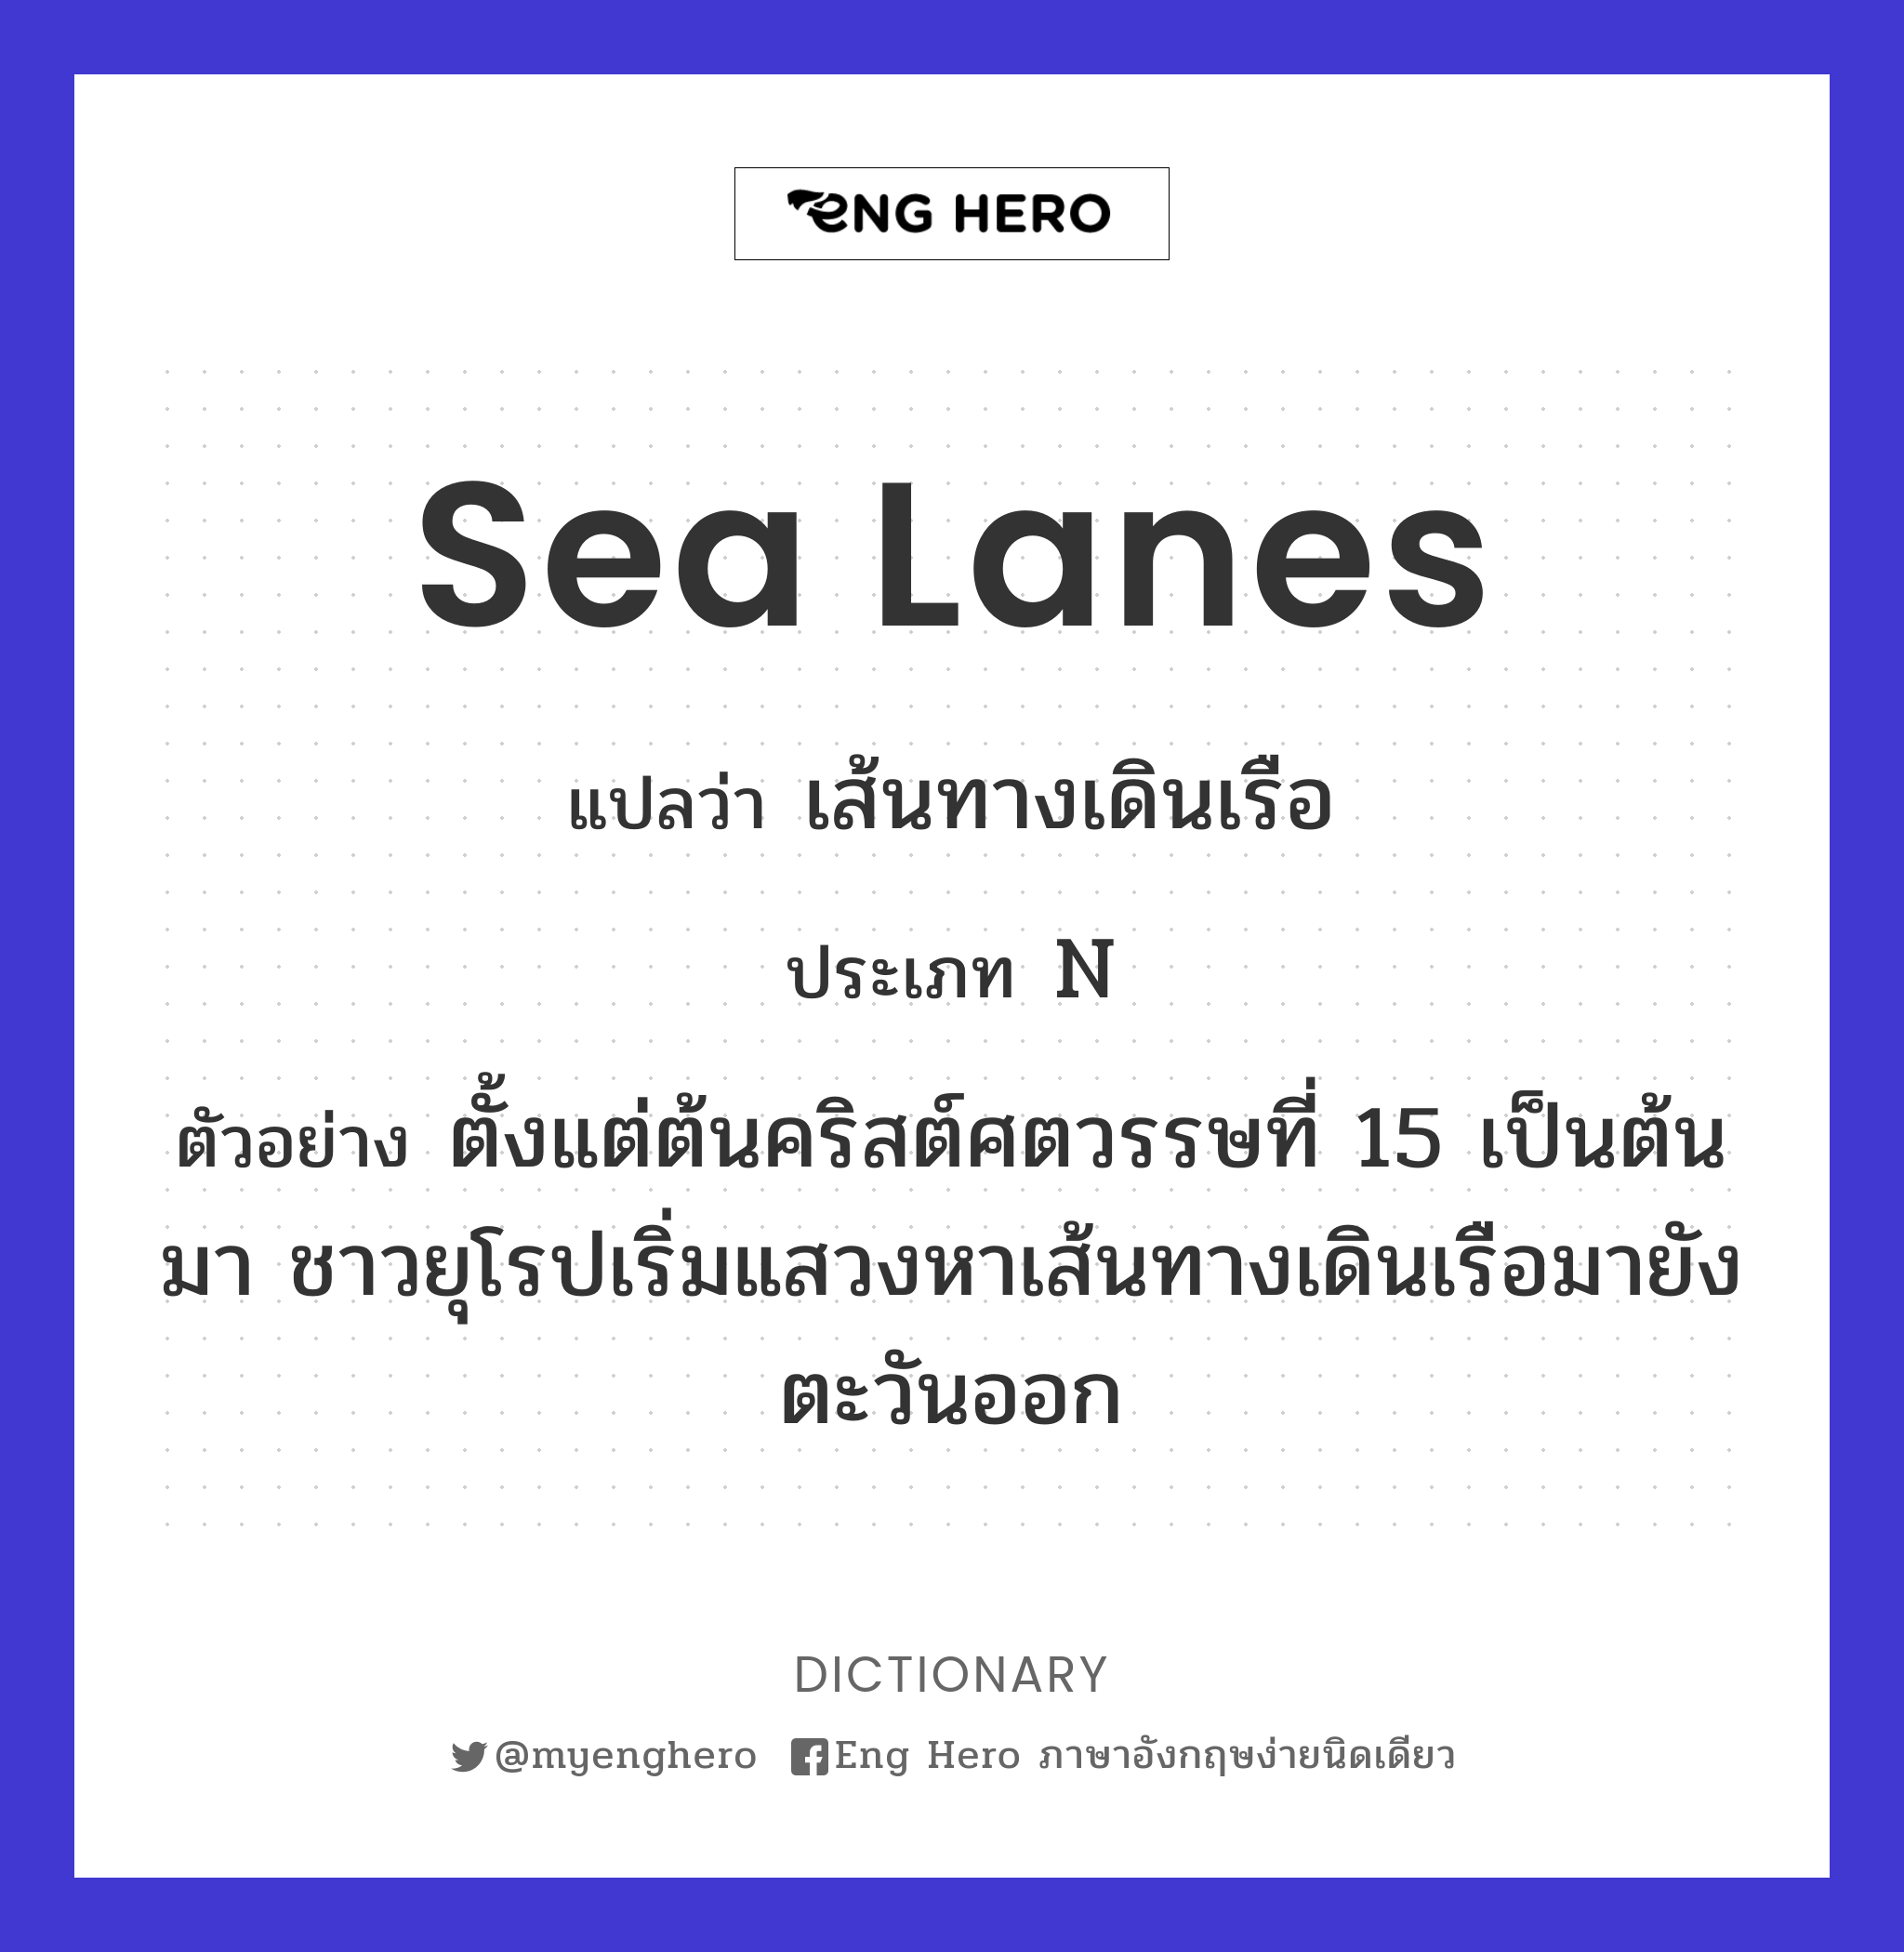 sea lanes